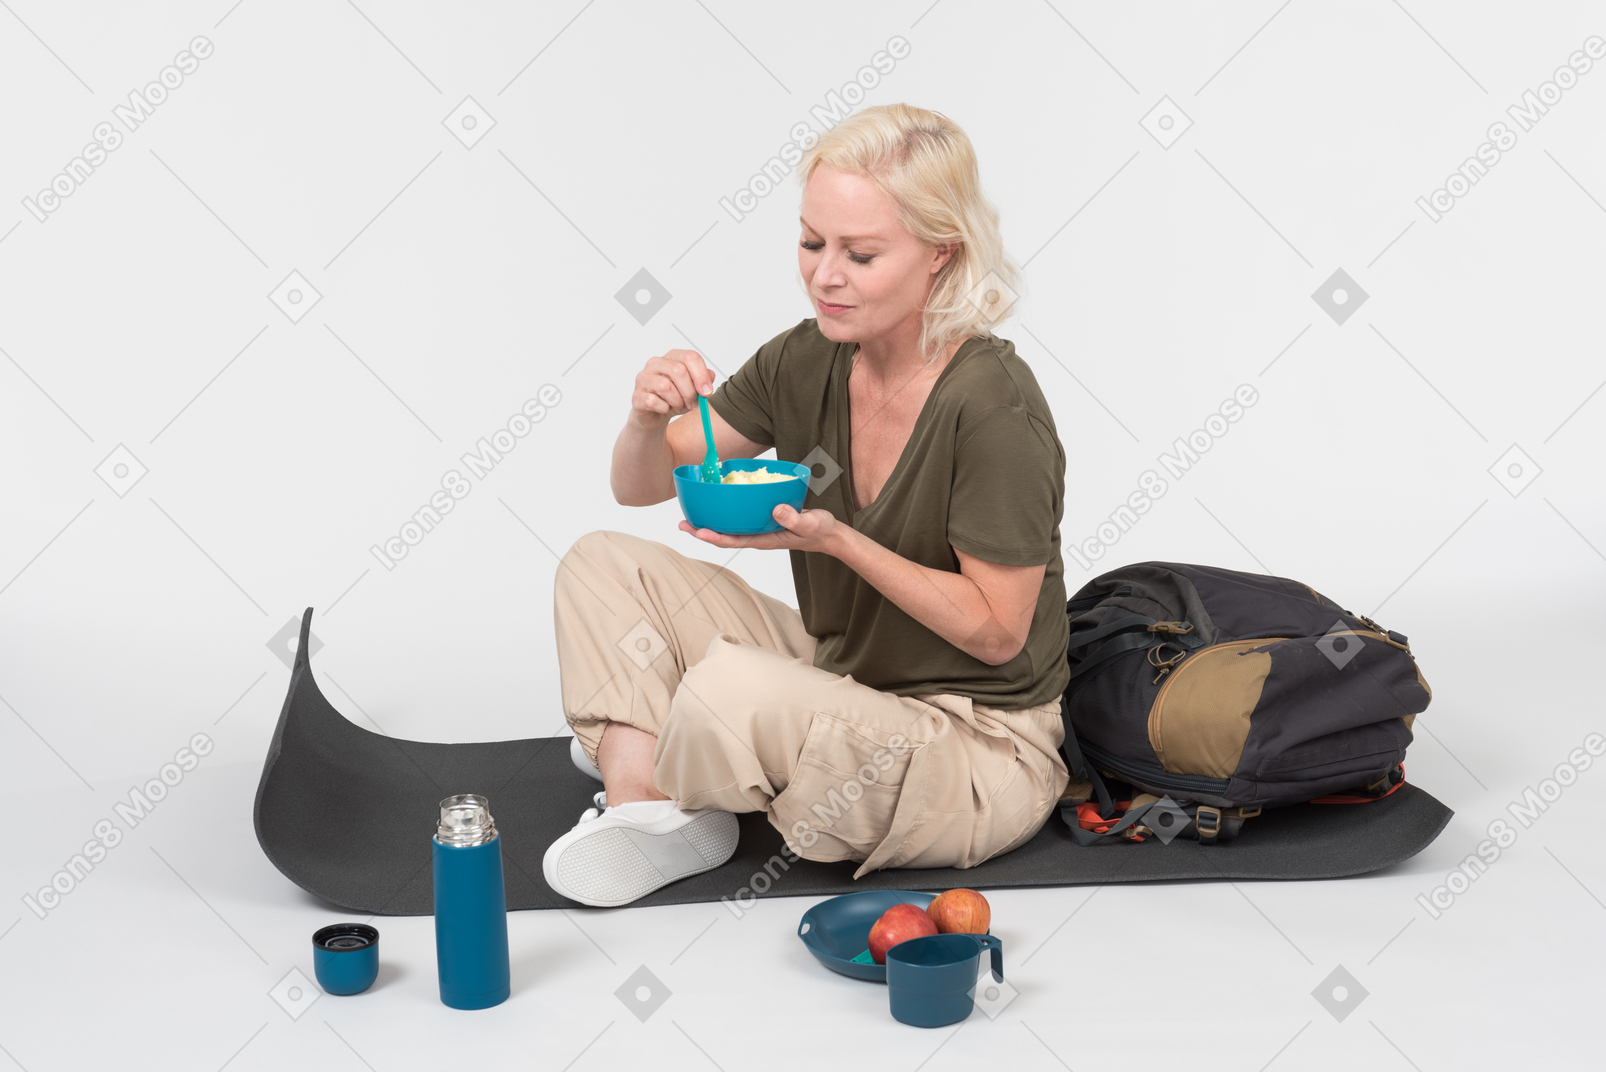 Mature female tourist sitting on tourist mat and eating